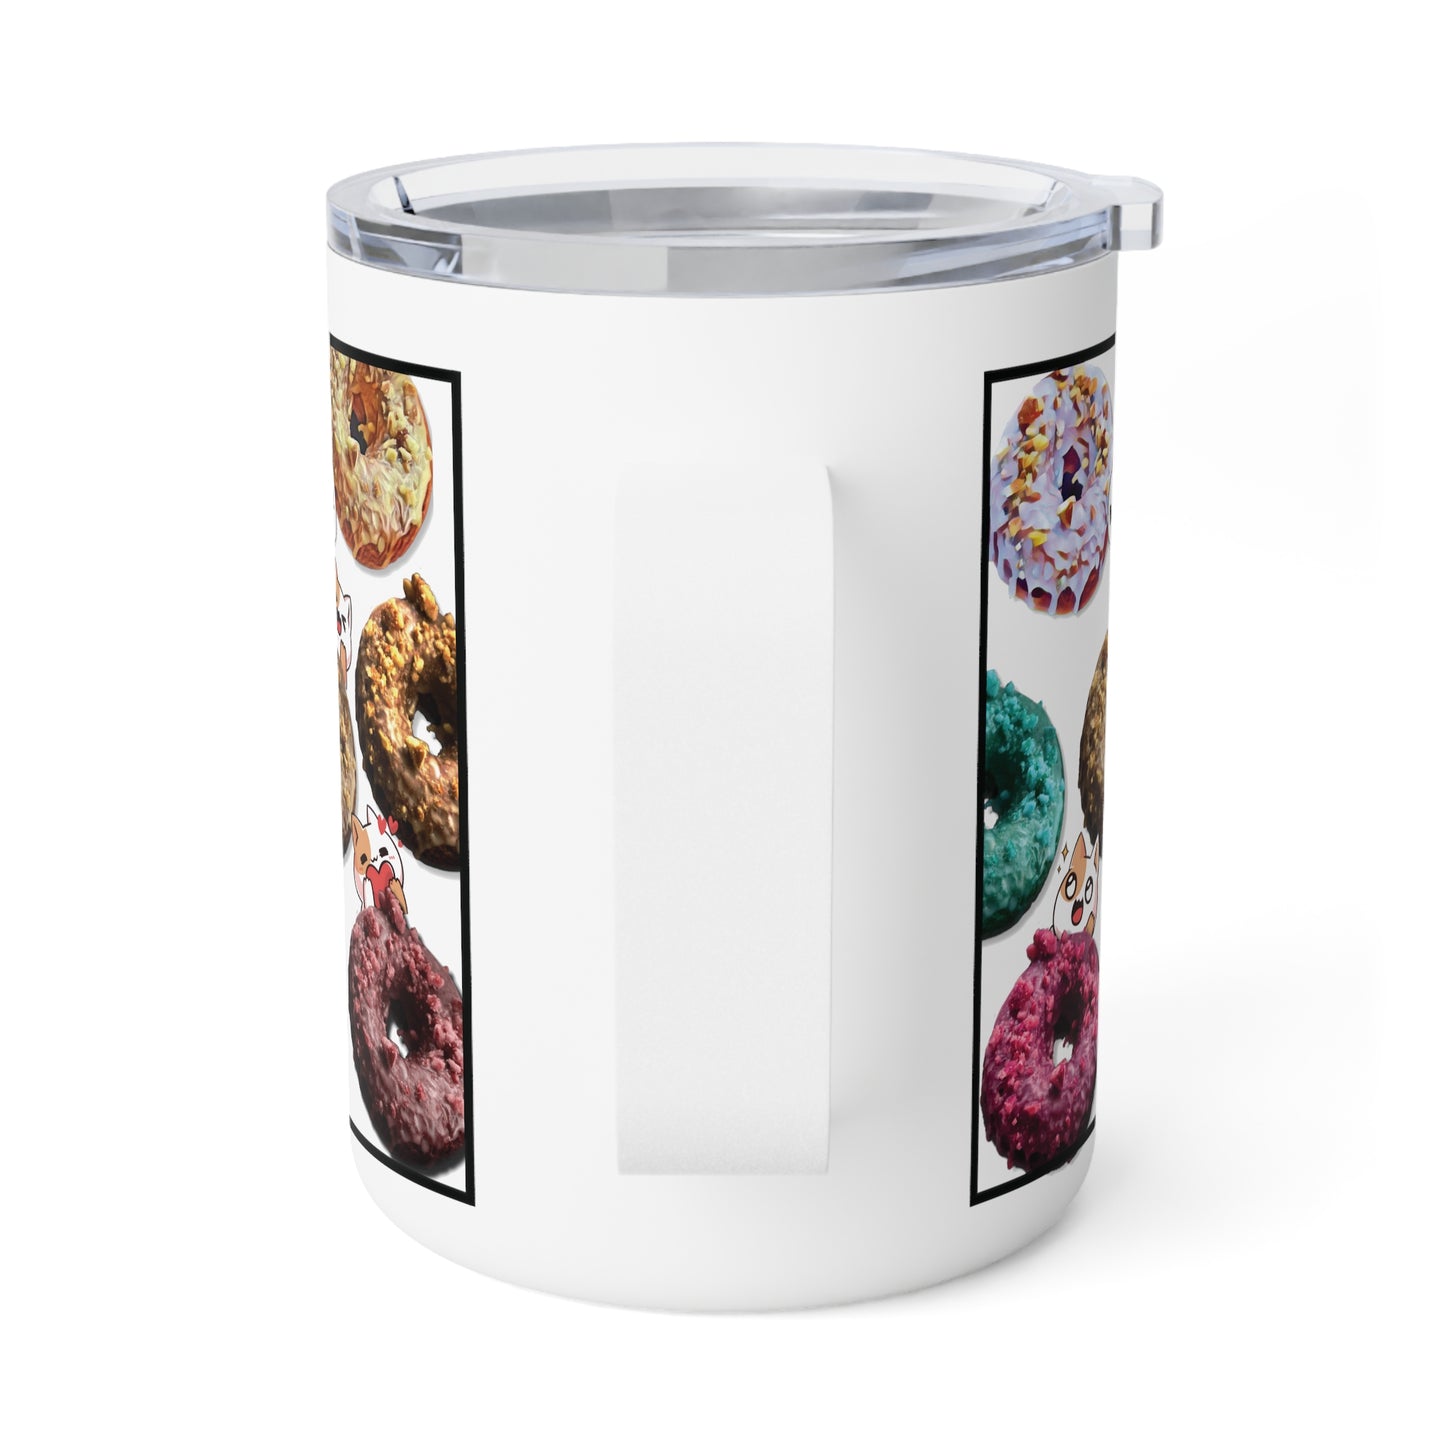 Kitten and Donuts Insulated Coffee Mug, 10oz